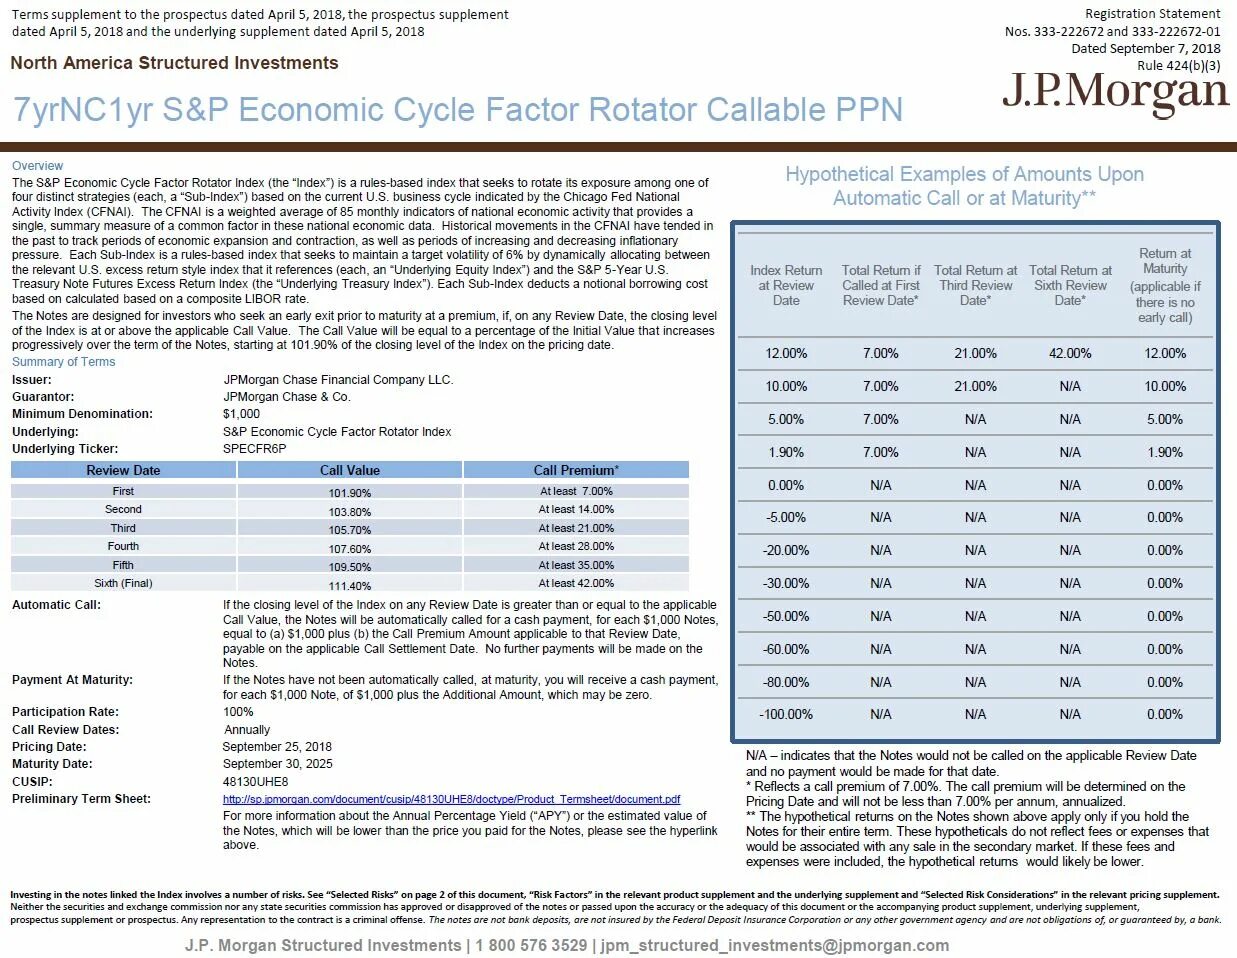 S P economic Cycle Factor Rotator Index график. Term Sheet в банке. Annual percentage Yield на русском. Term Sheet в банке Россия. Term sheet